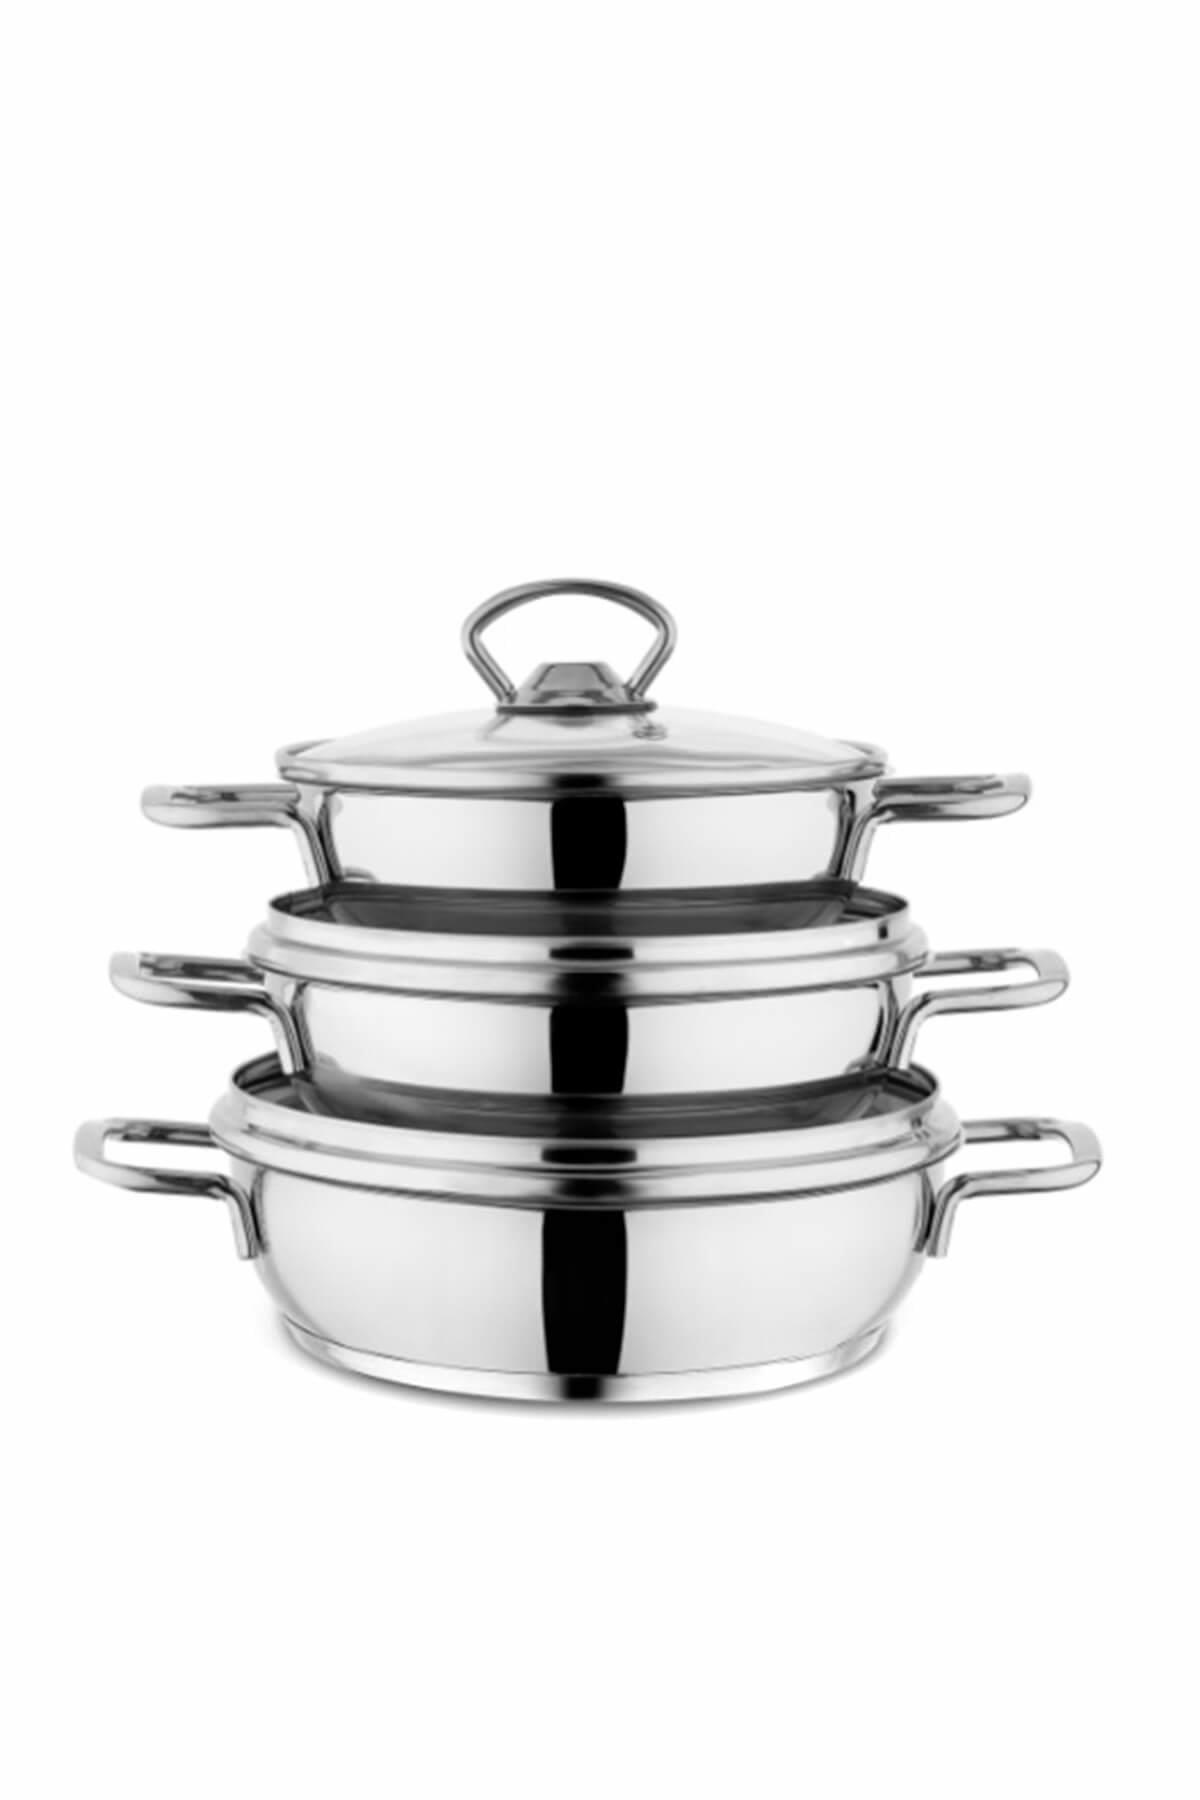 Schafer Cookhaus 6 Parça Çelik Sahan Seti-Gümüş